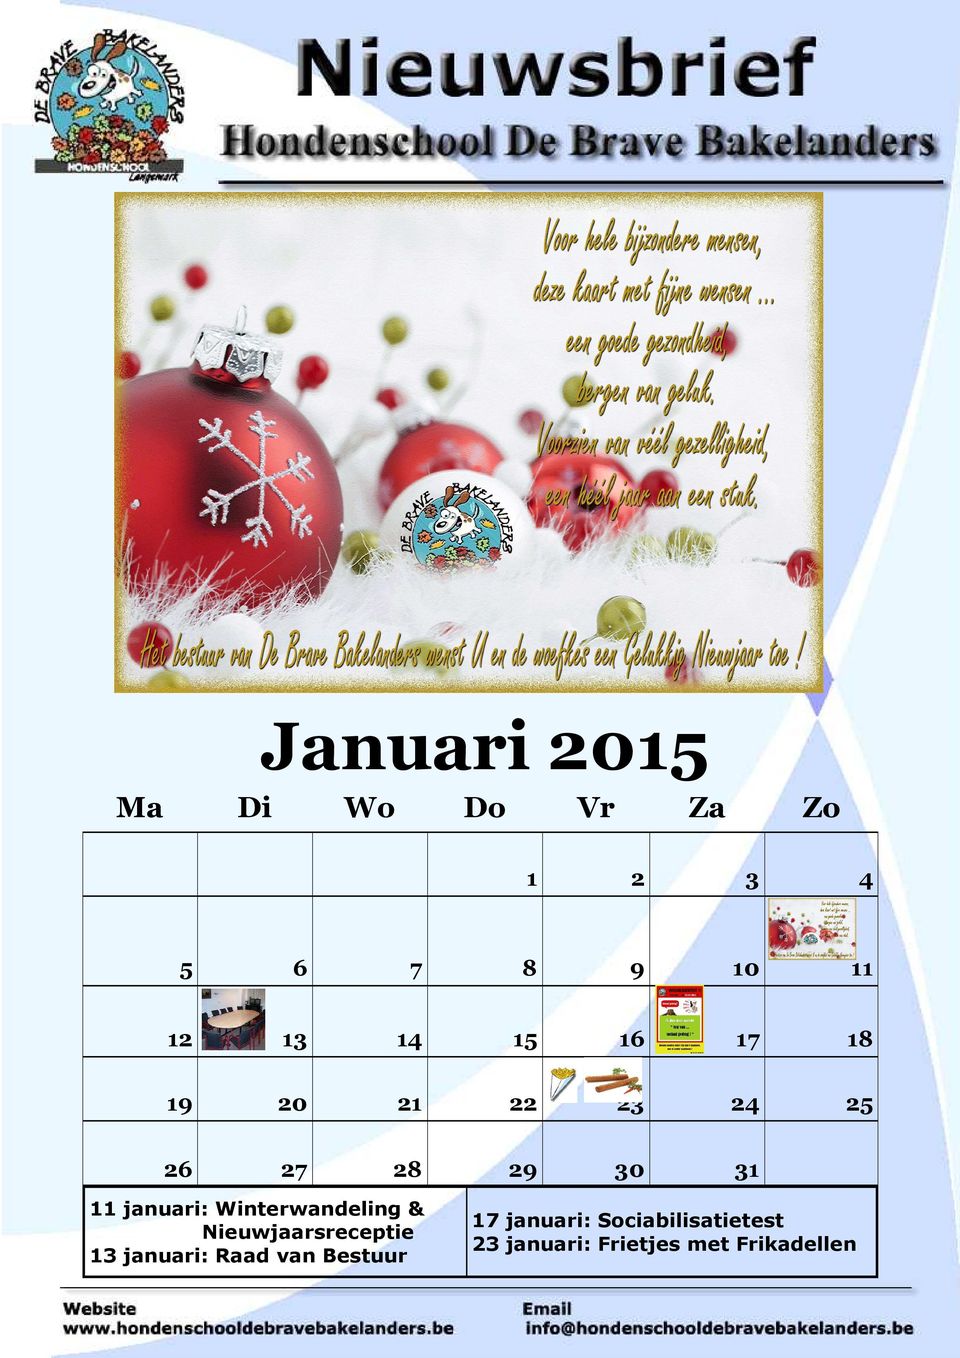 Winterwandeling & Nieuwjaarsreceptie 13 januari: Raad van Bestuur